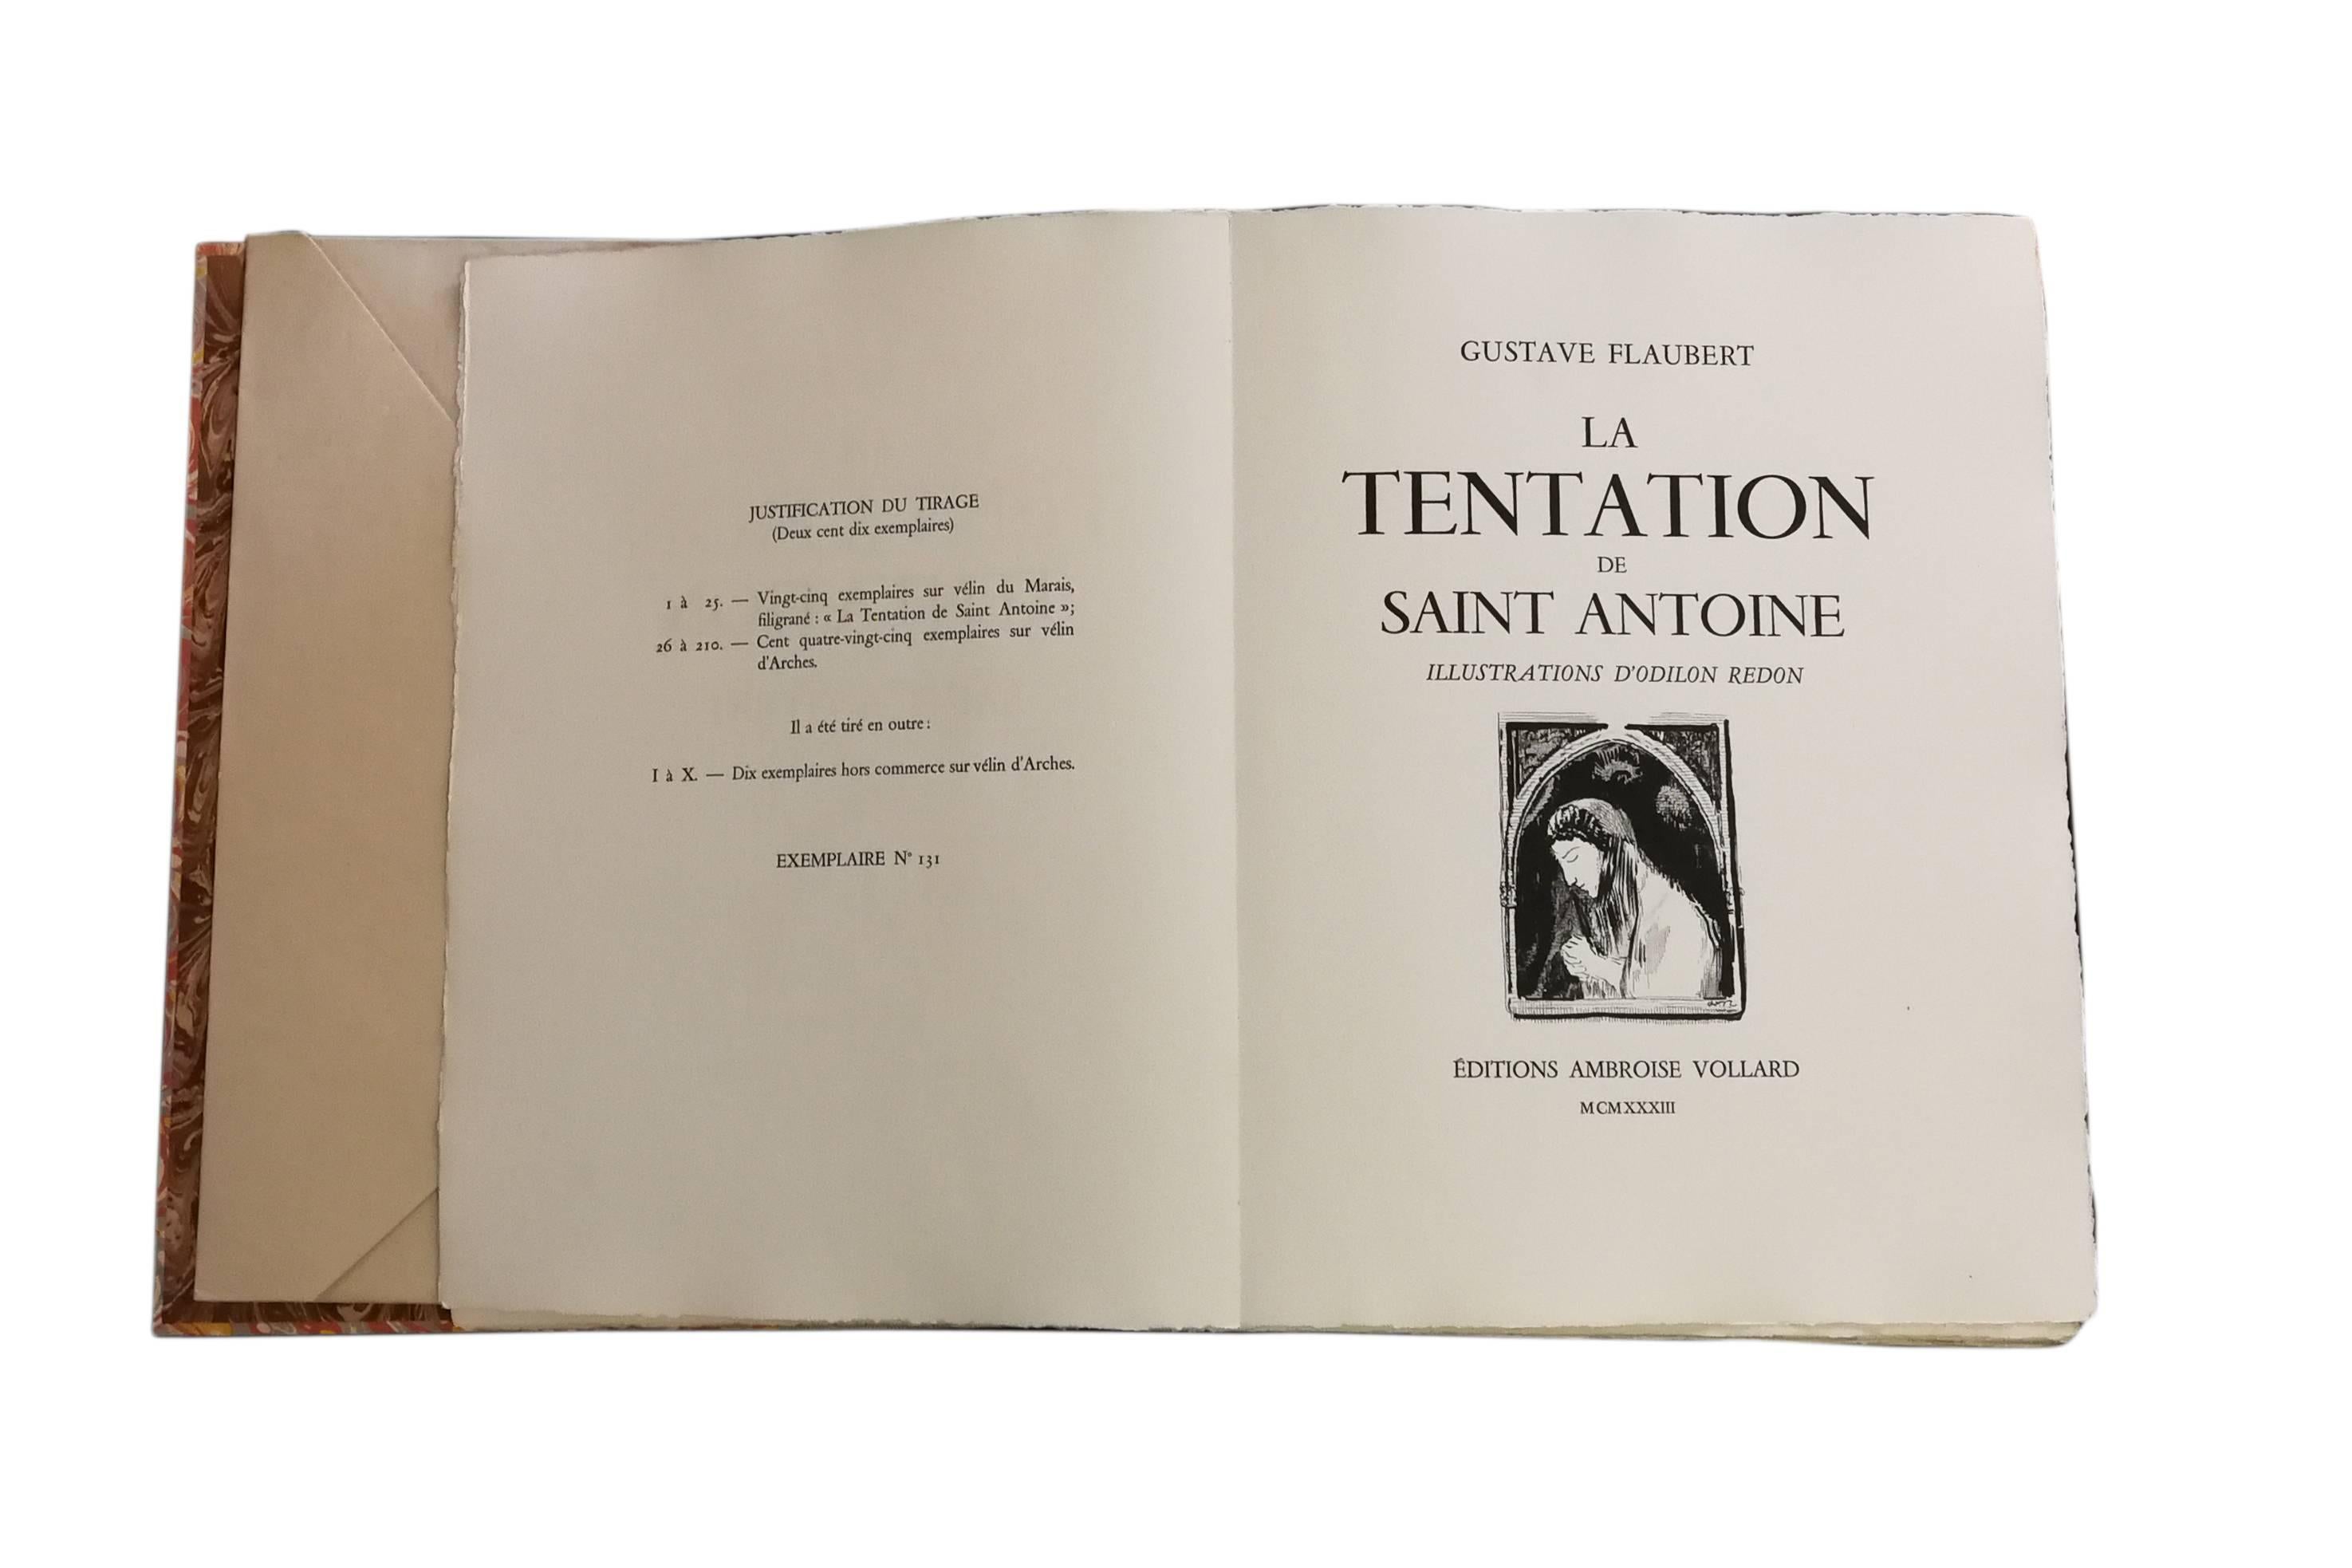 La Tentation de Saint Antoine, Gustave Flaubert's illustrated book by O. Redon - Print by Odilon Redon